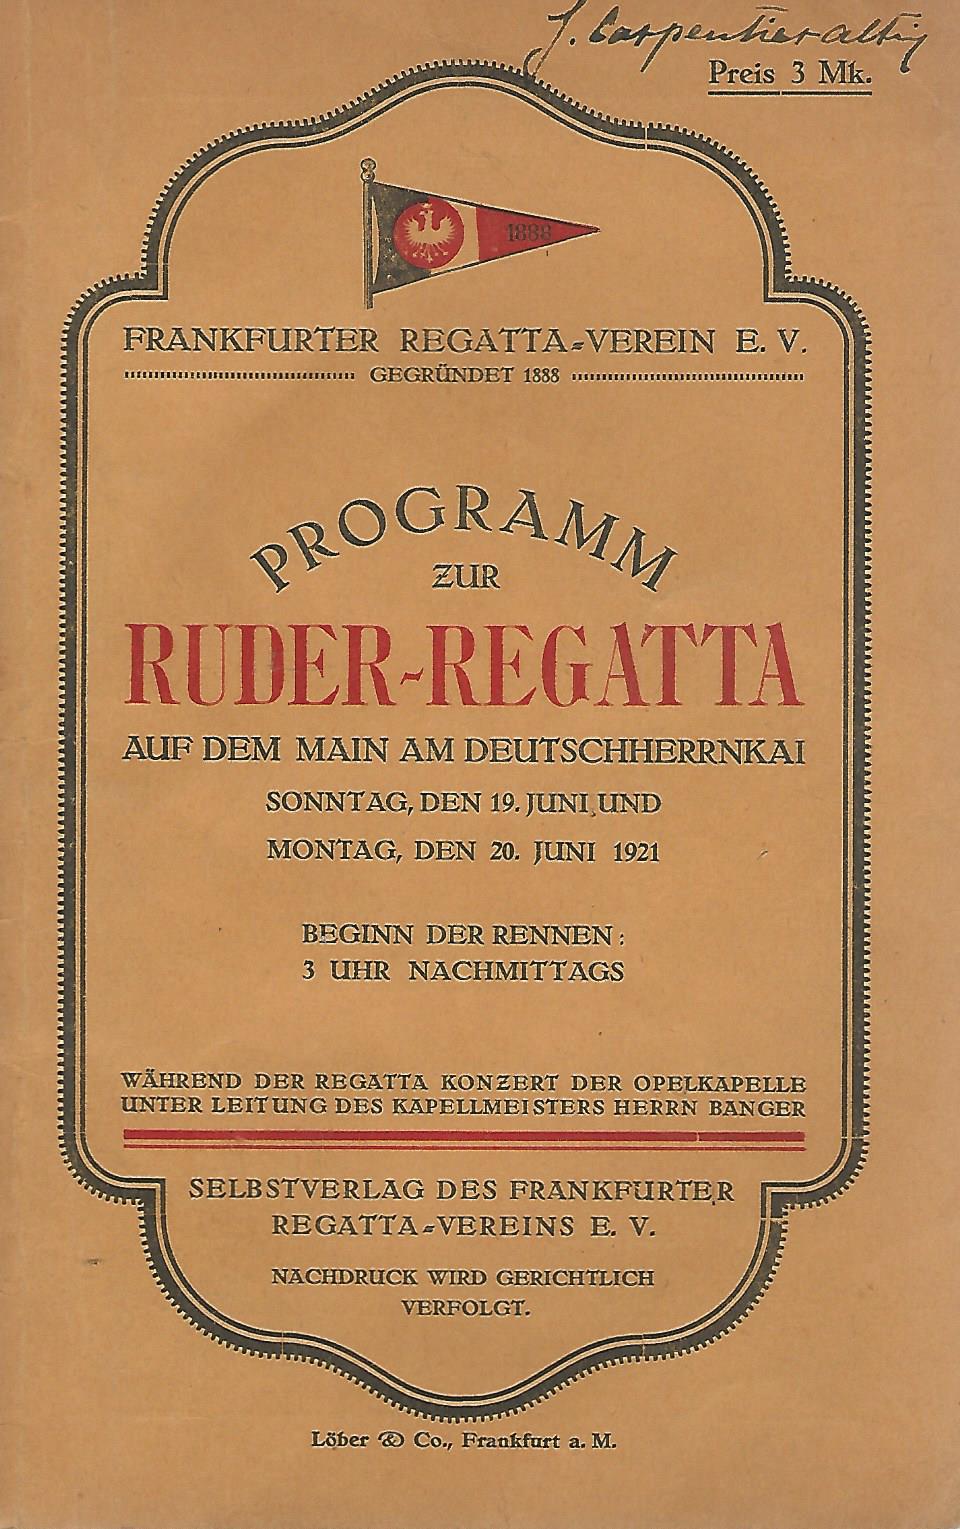  - Programm zur Ruder-Regatta Frankfurter Regatta-Verein E.V.